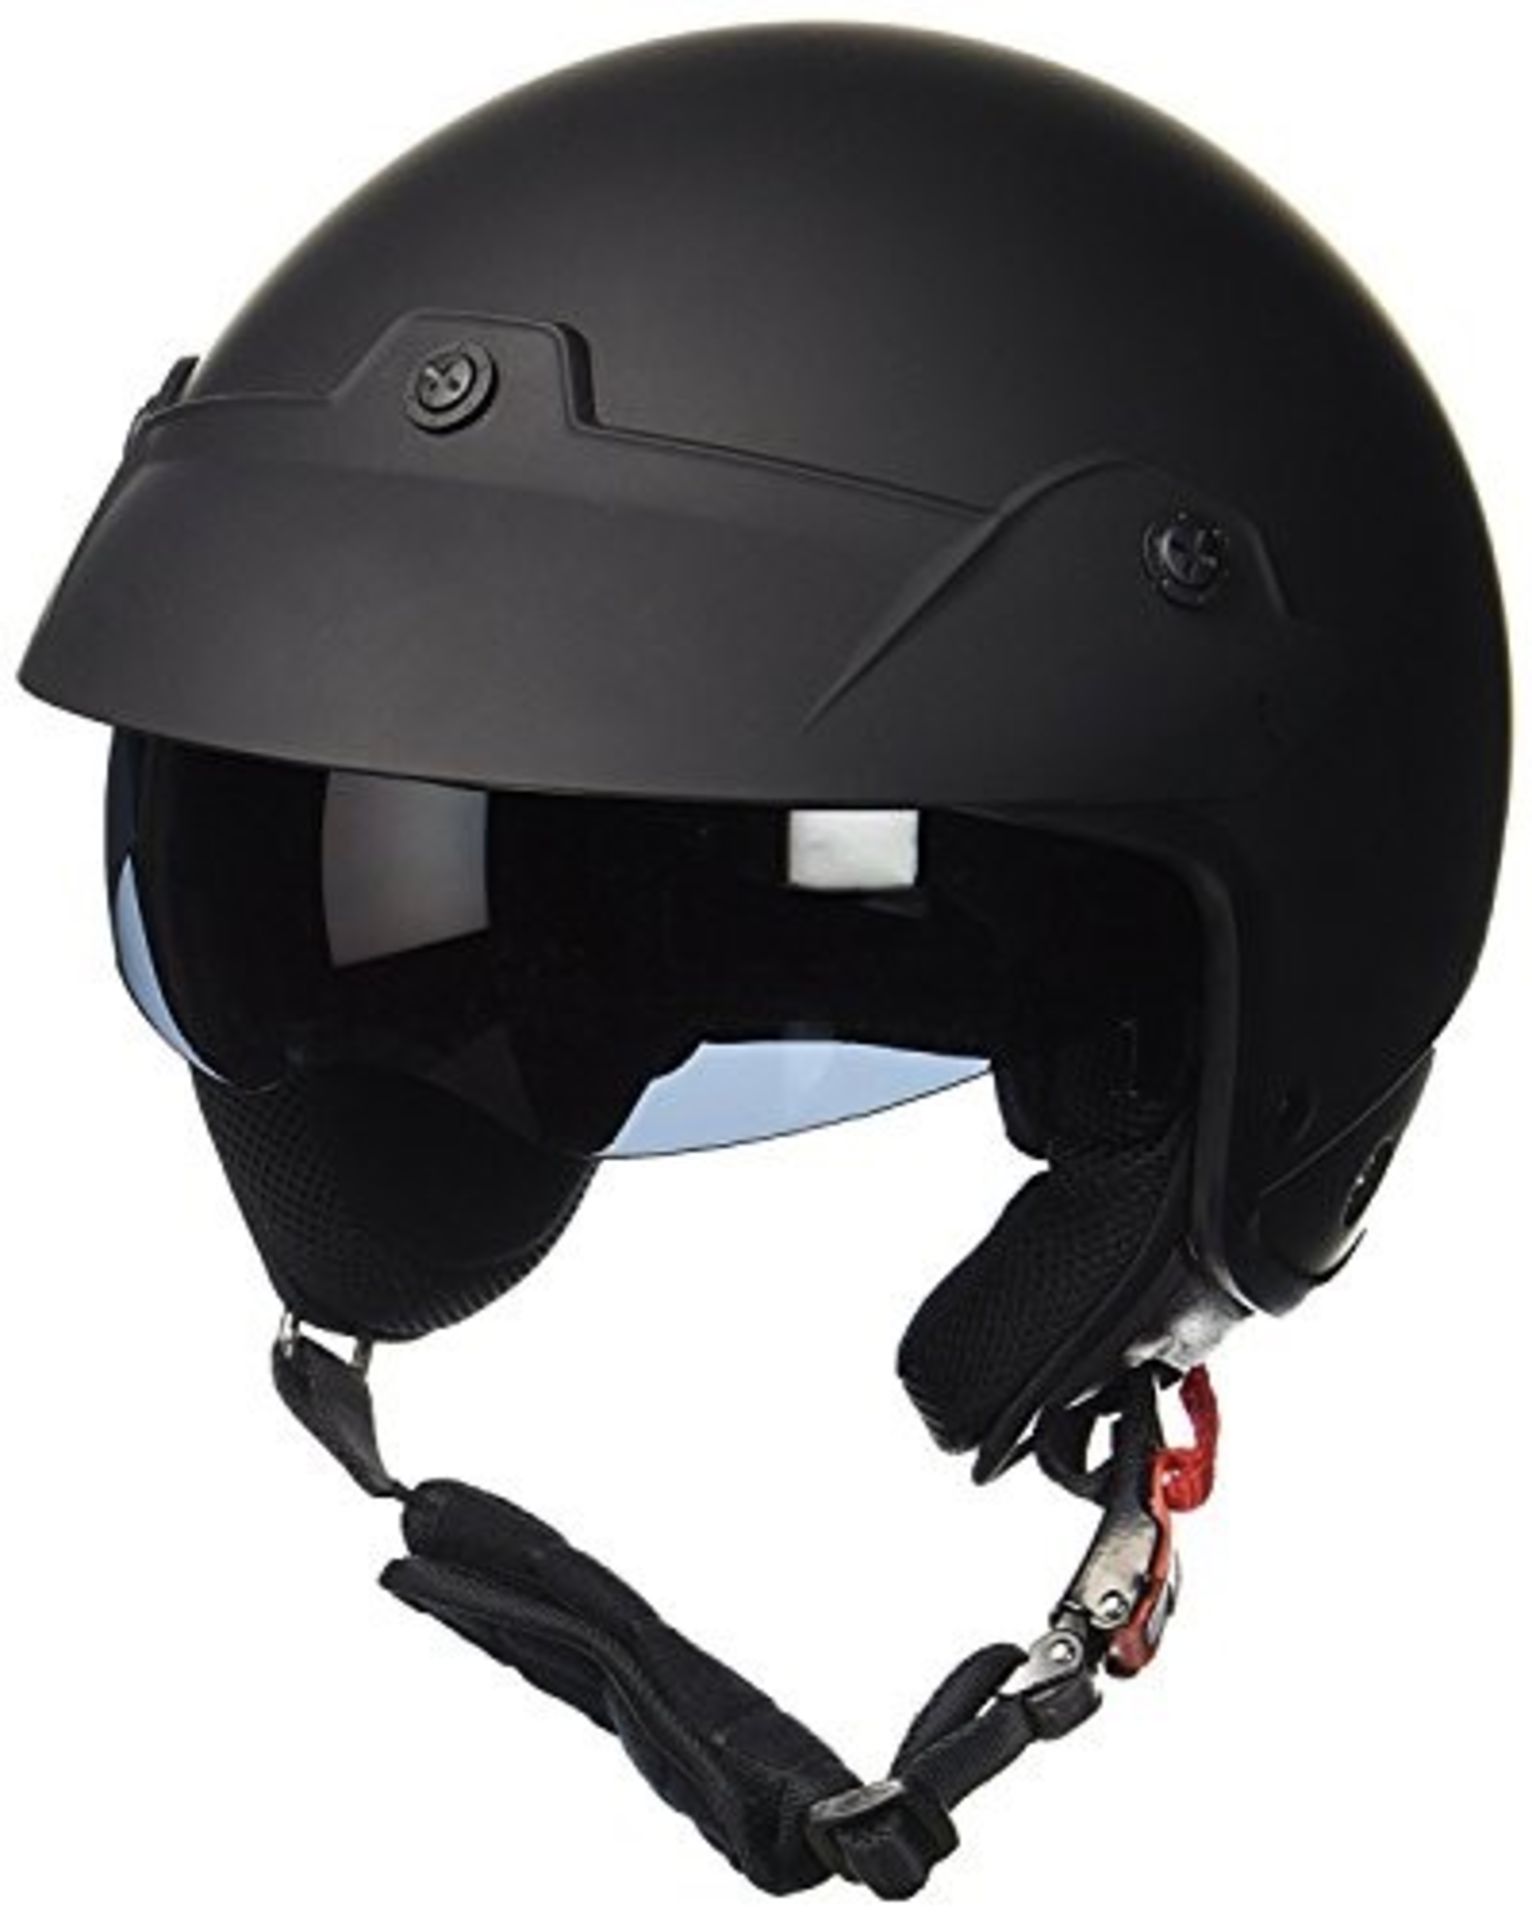 Protectwear Jet helmet H740 with integrated sun